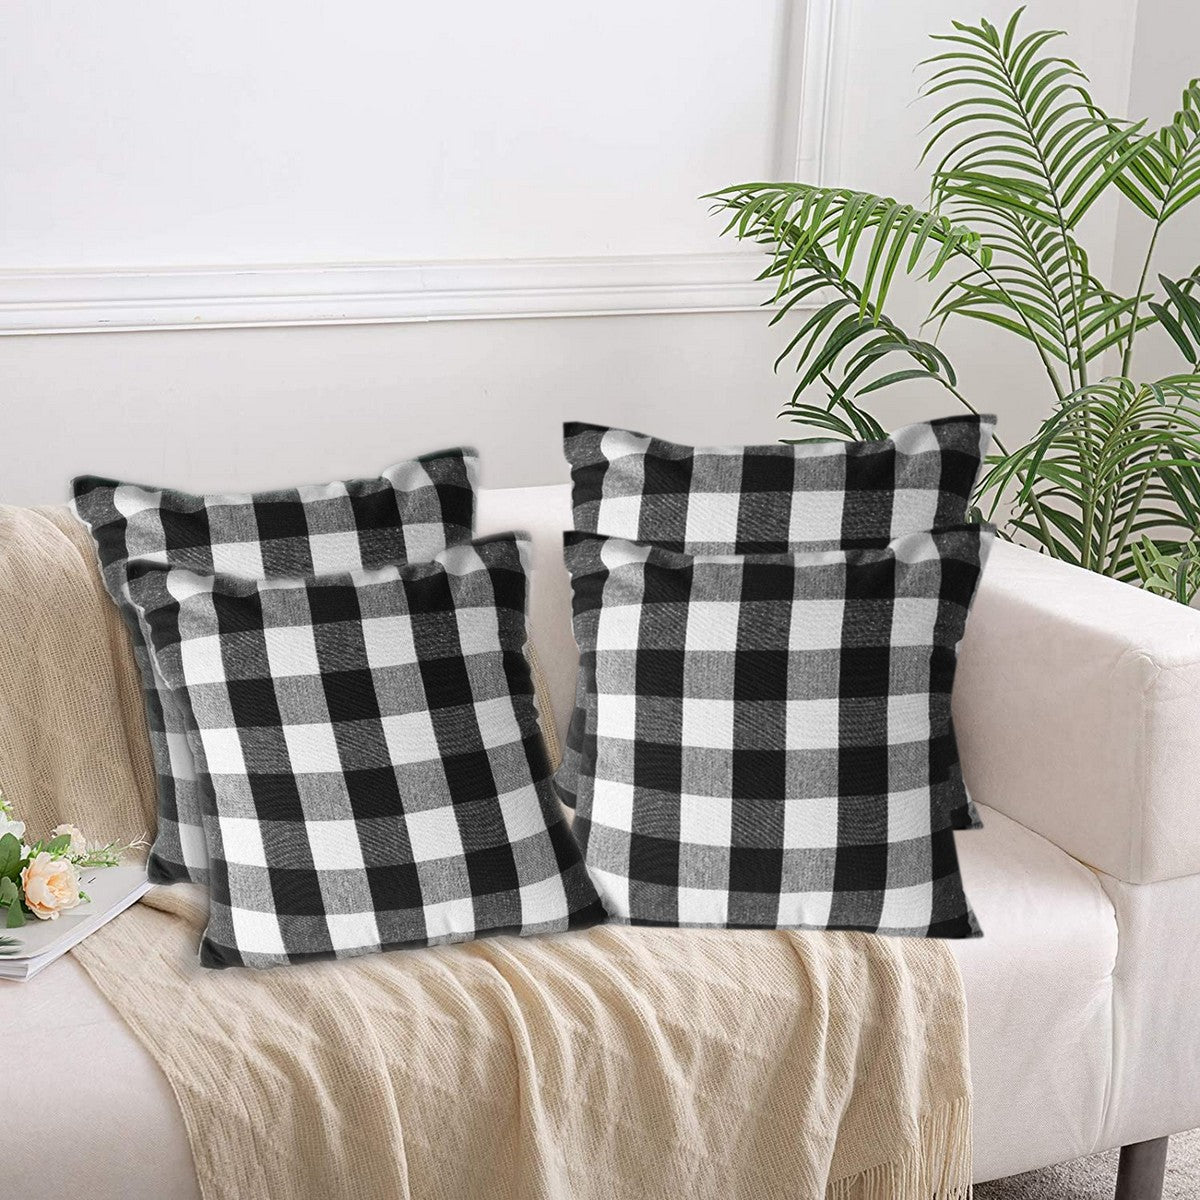 Lushomes Square Cushion Cover, Cotton Sofa Pillow Cover set of 4, 18x18 Inch, Big Checks, Black and White Checks, Pillow Cushions Covers (Pack of 4, 45x45 Cms)